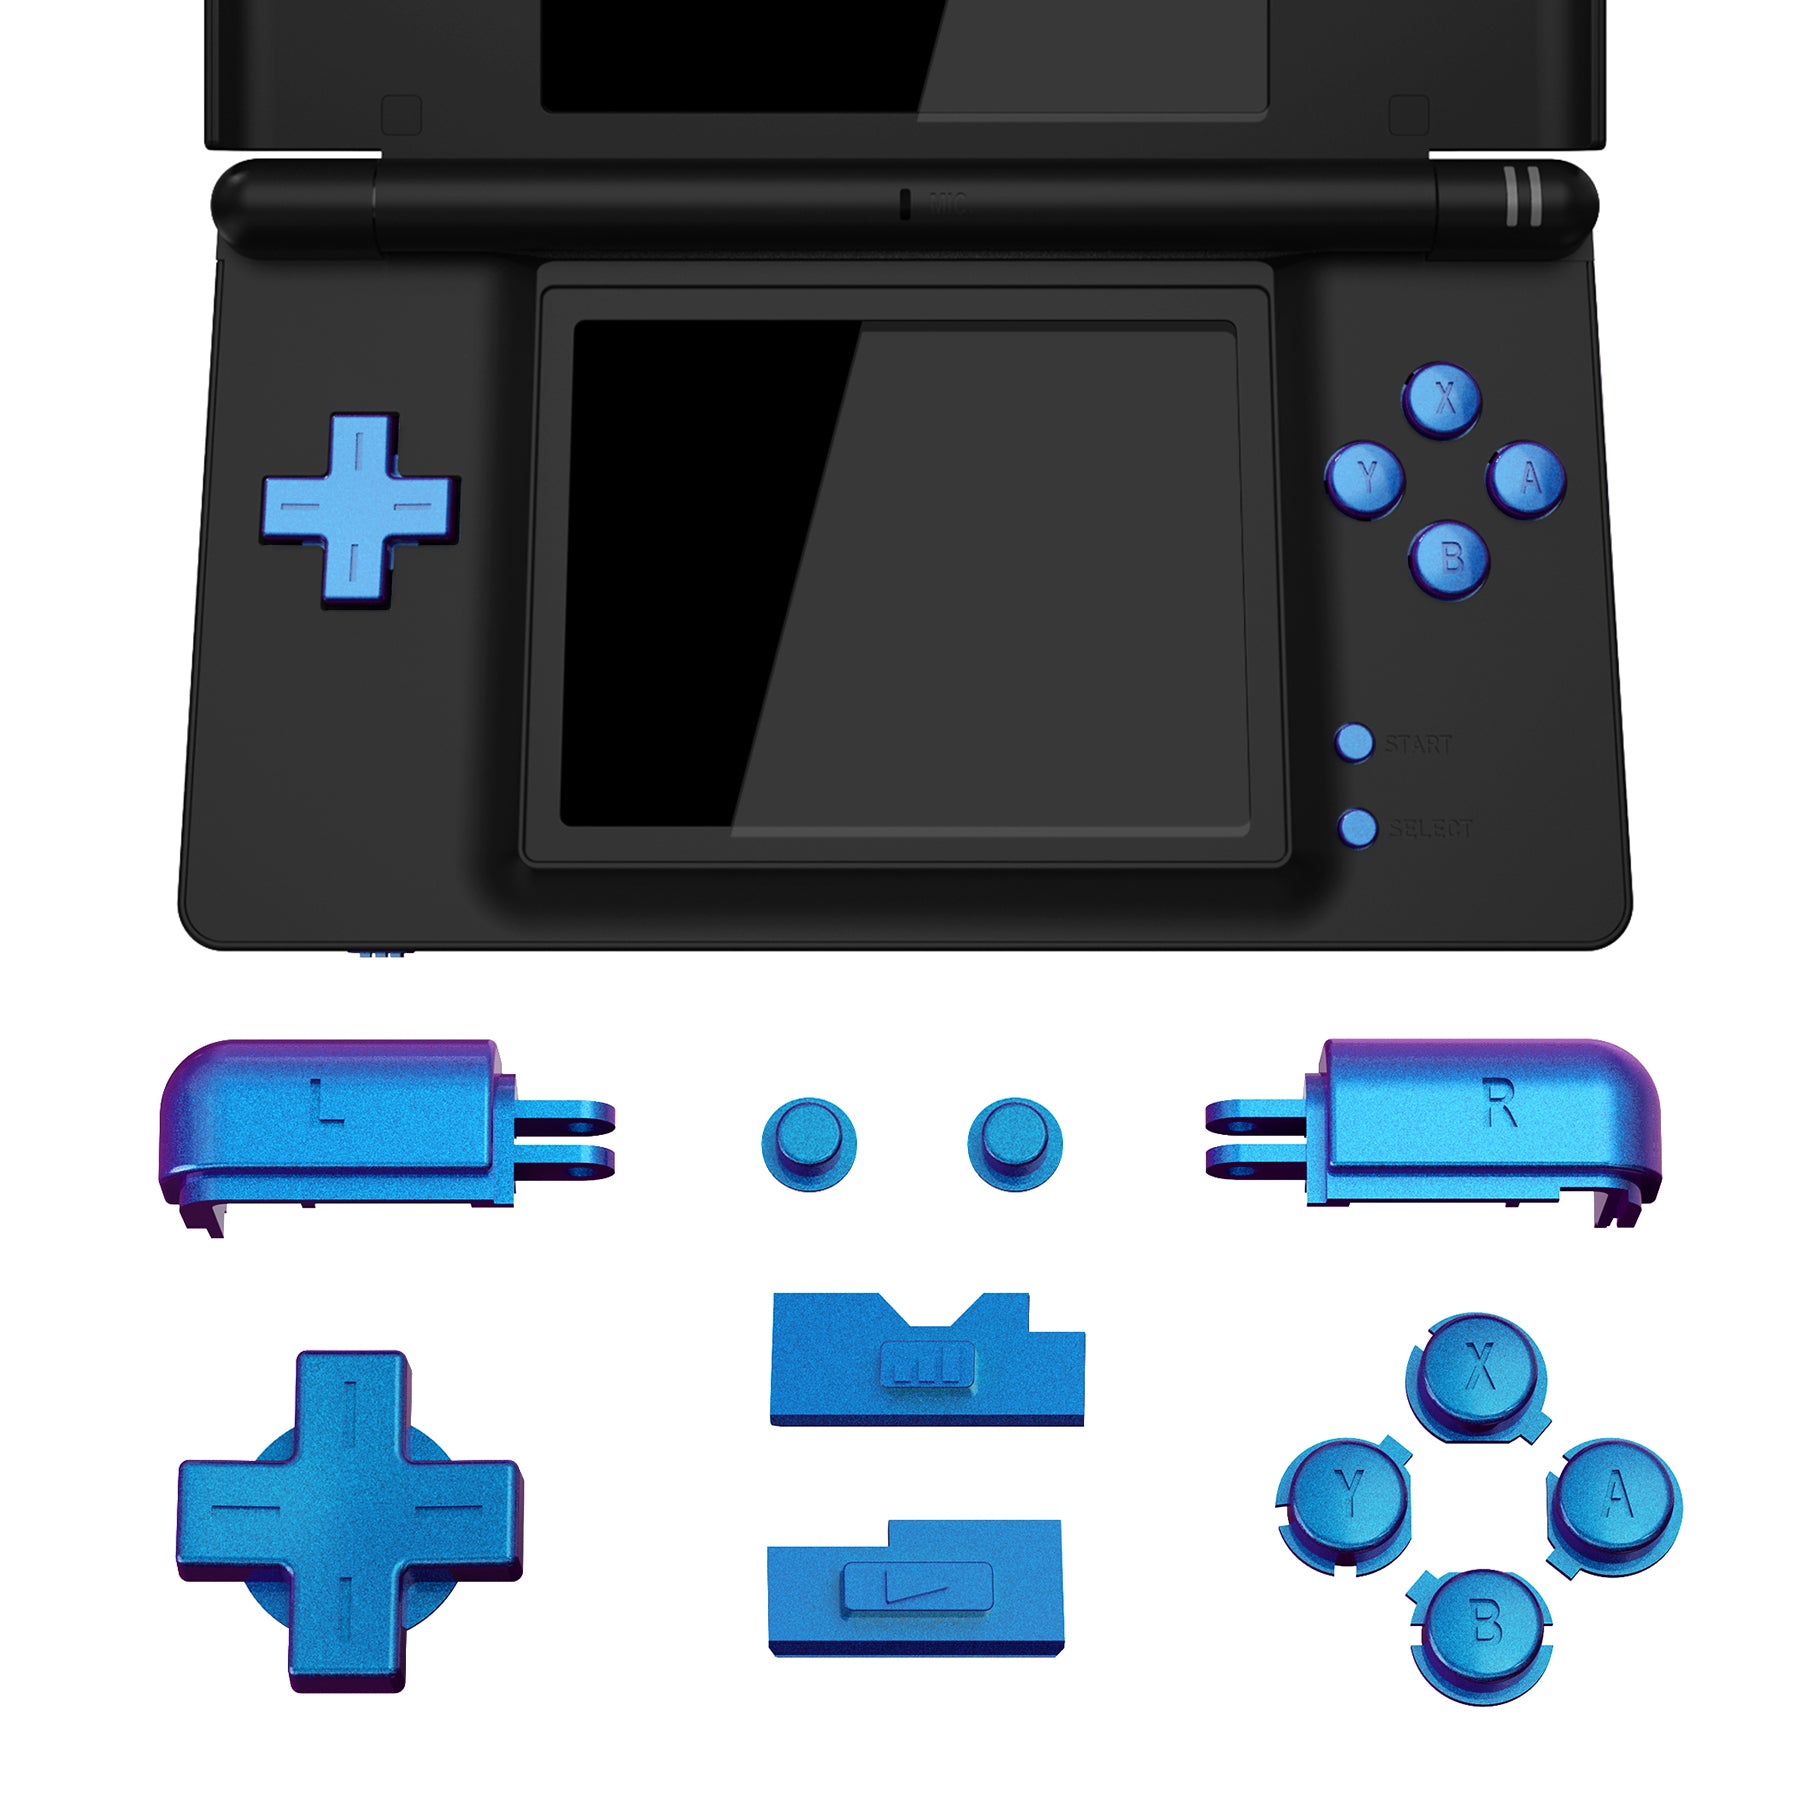 Nintendo DS lite - Nintendo Switch